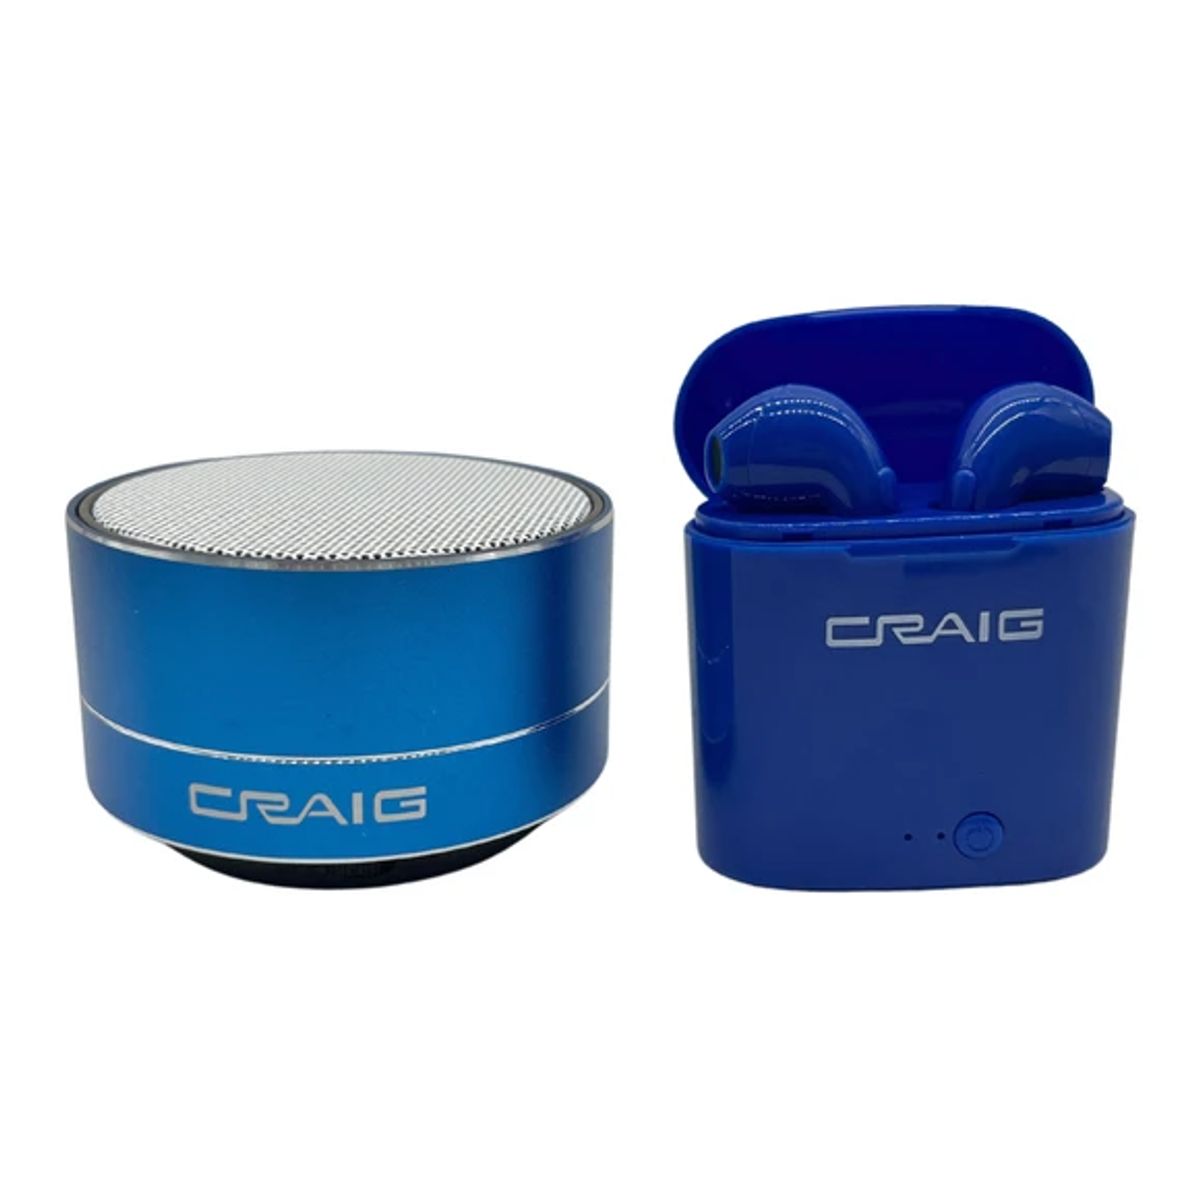 Photos - Headphones CRAIG CRAIG® 2-in-1 Wireless Bluetooth Earbuds & Speaker - Blue VSN-AG609